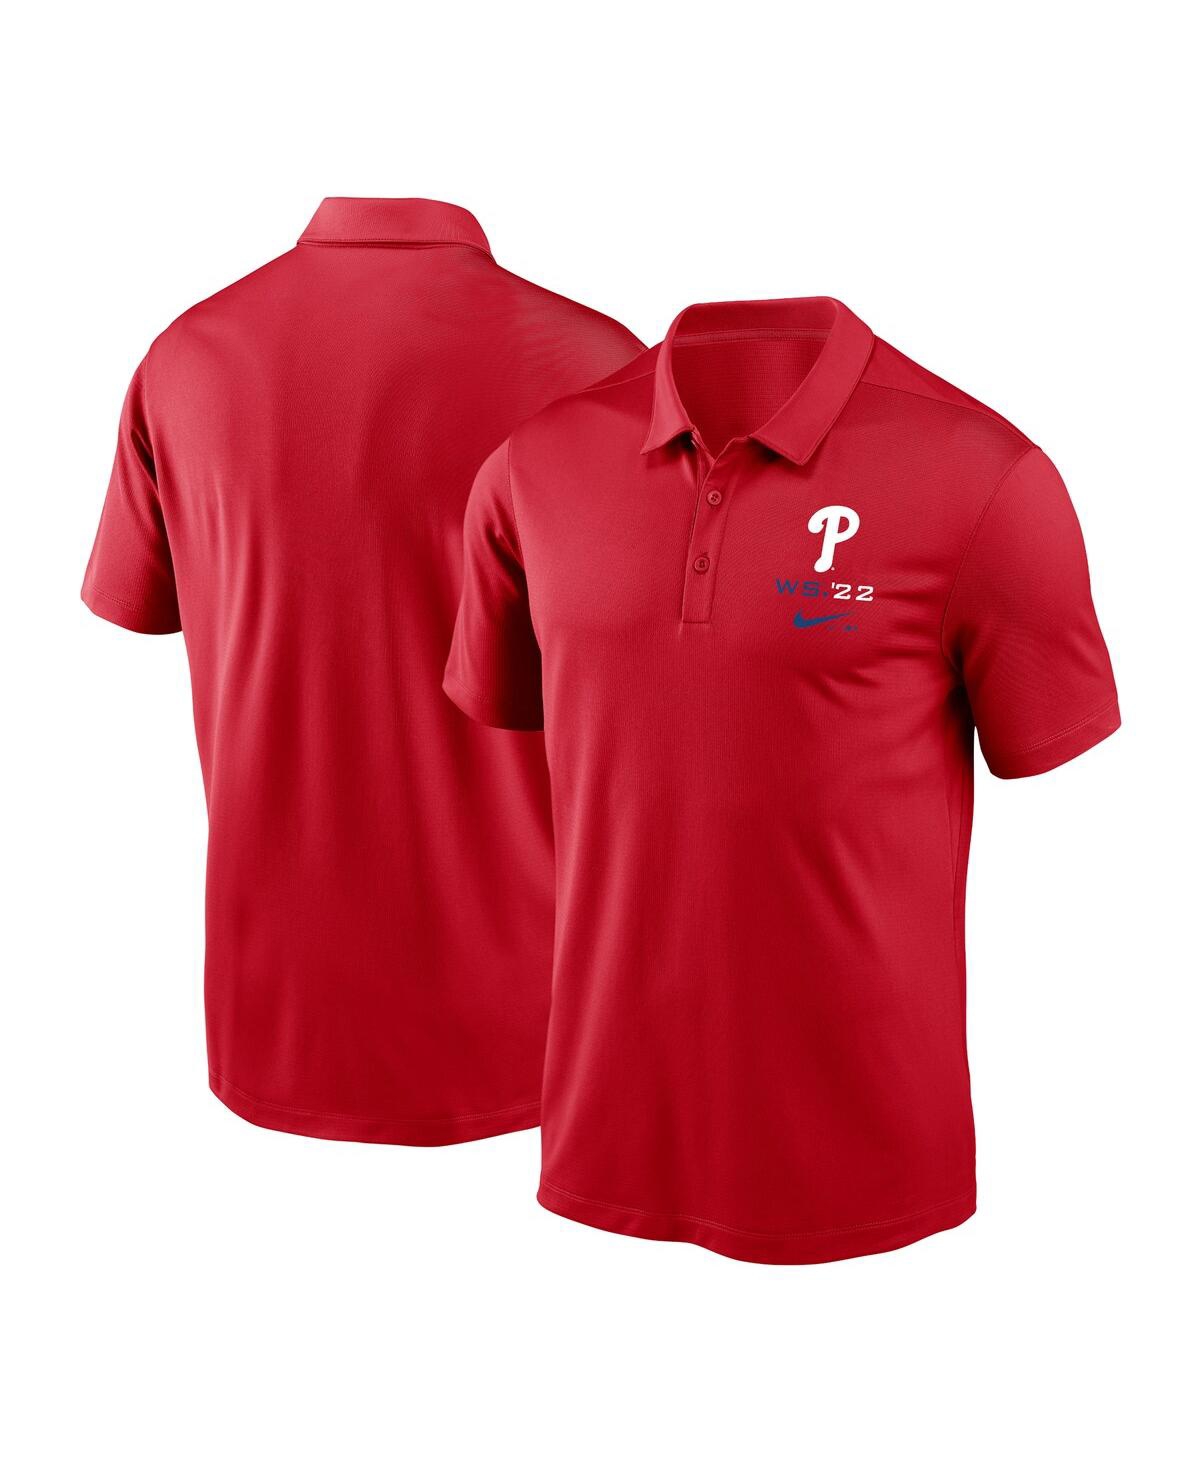 Men's Nike Red Philadelphia Phillies 2022 World Series Performance Polo Shirt